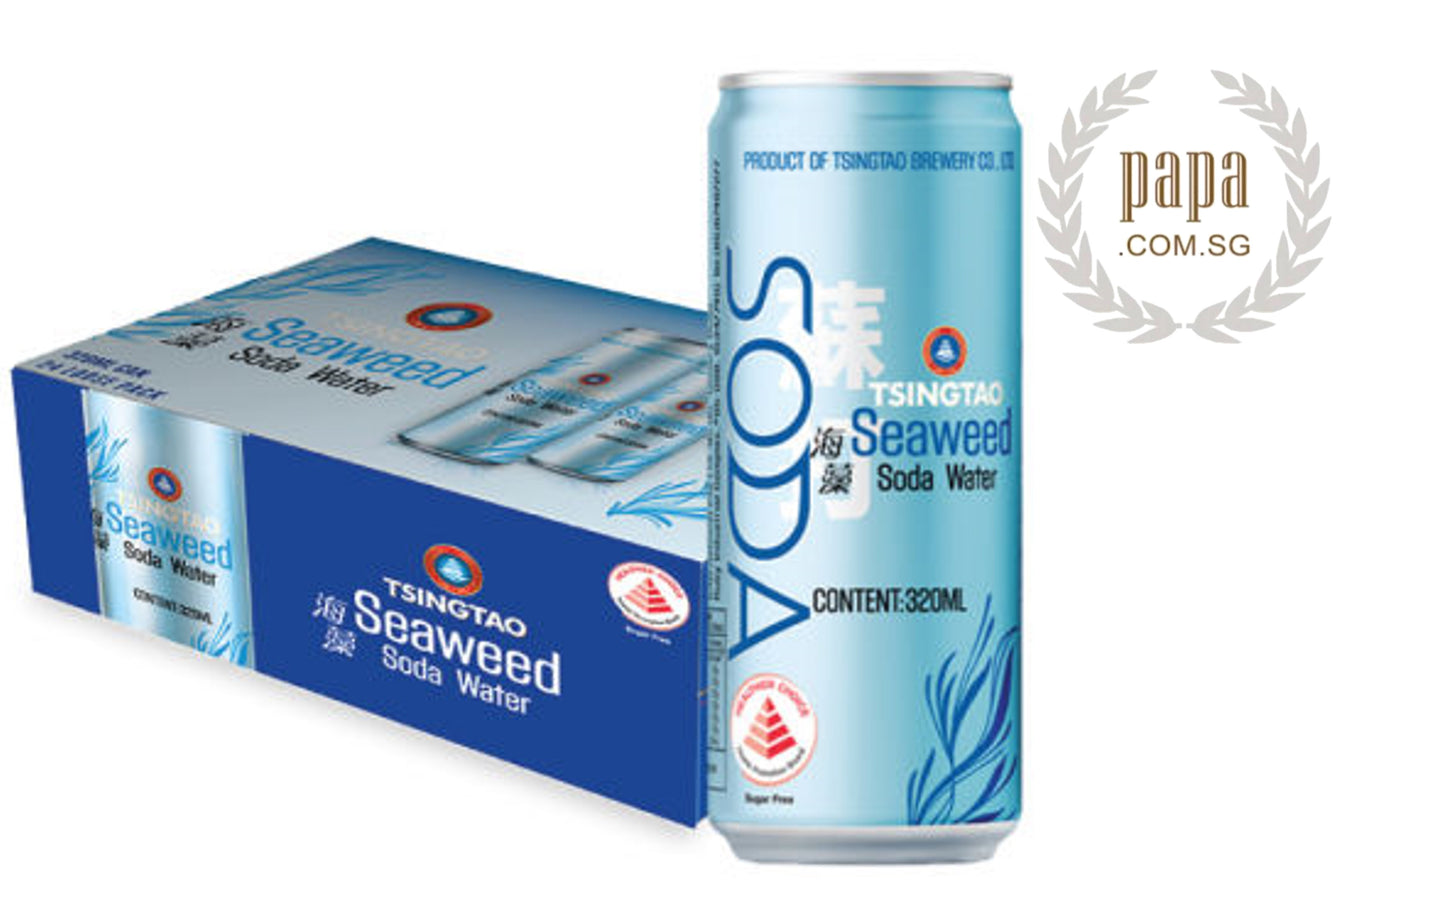 Tsingtao Seaweed Soda Water - Healthier Choice Award